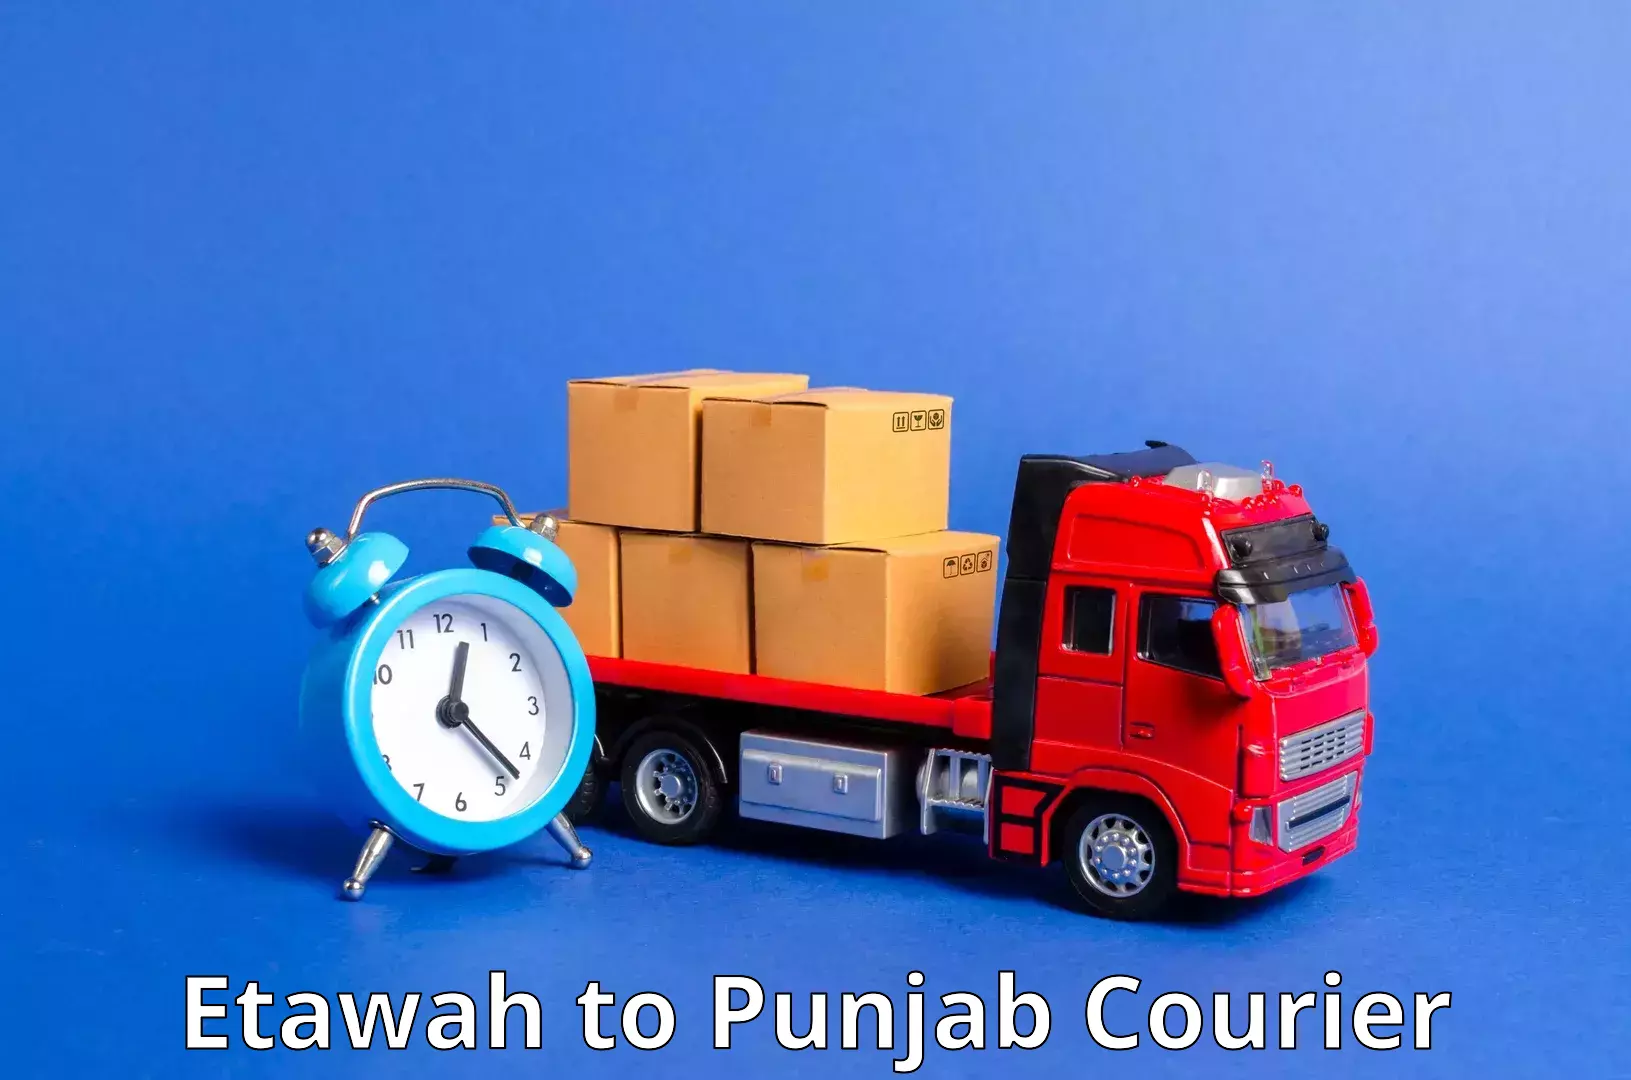 Subscription-based courier Etawah to Punjab